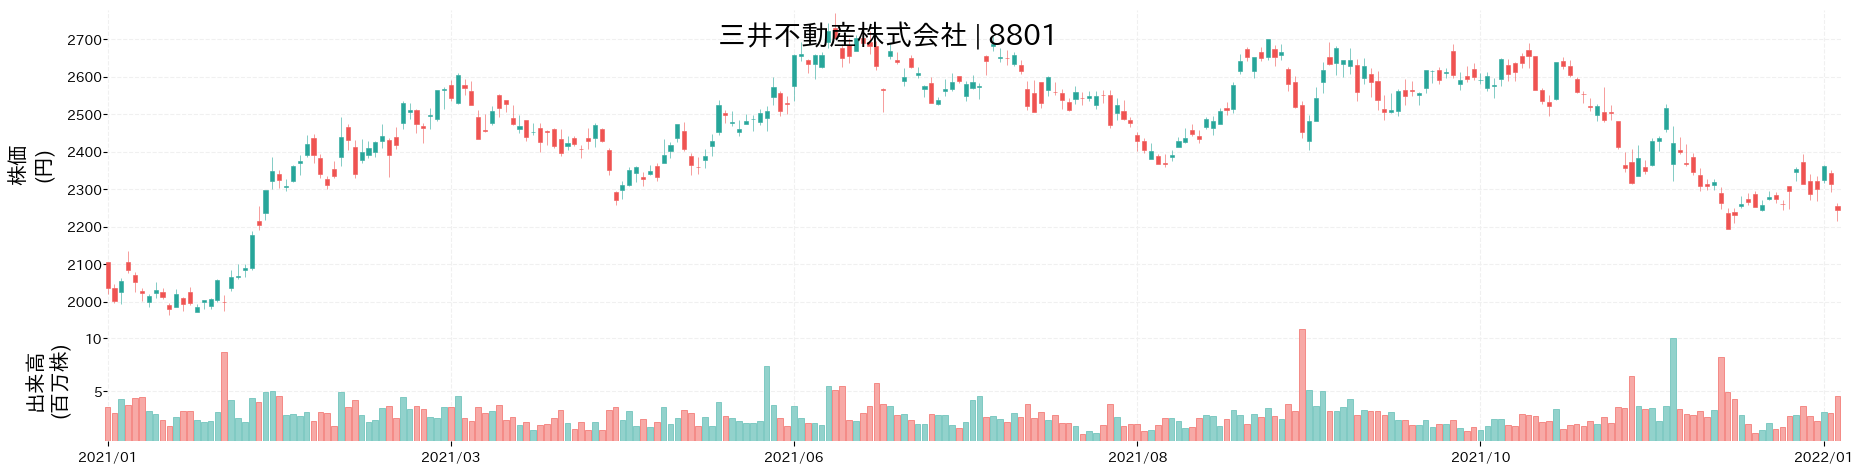 三井不動産の株価推移(2021)